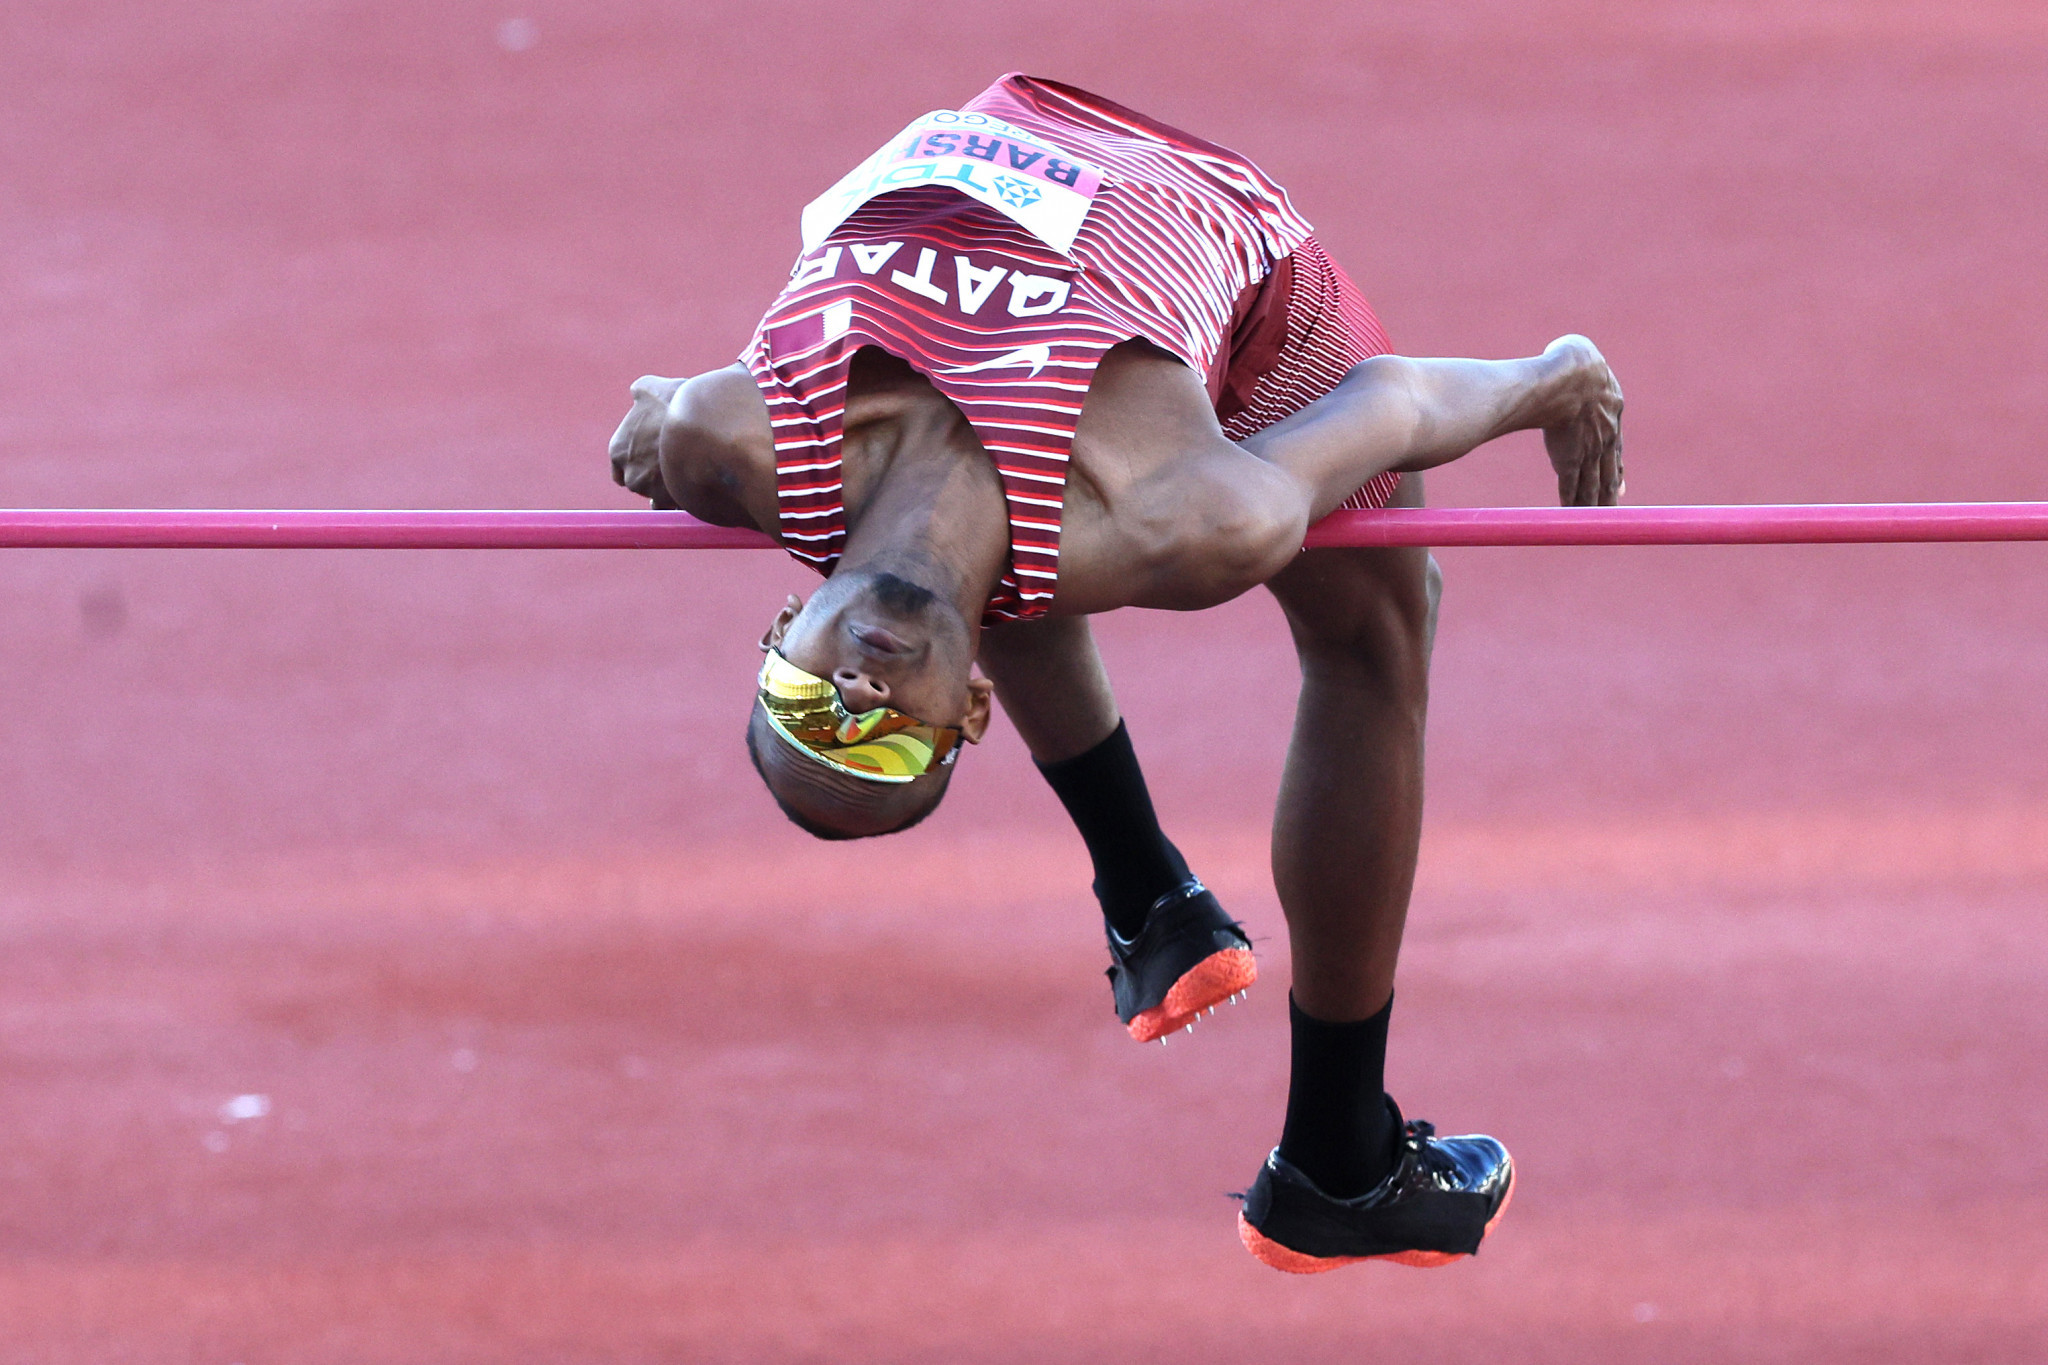 Qatar's Olympic high jump champion Mutaz Barshim won a third world title in Oregon ©Getty Images